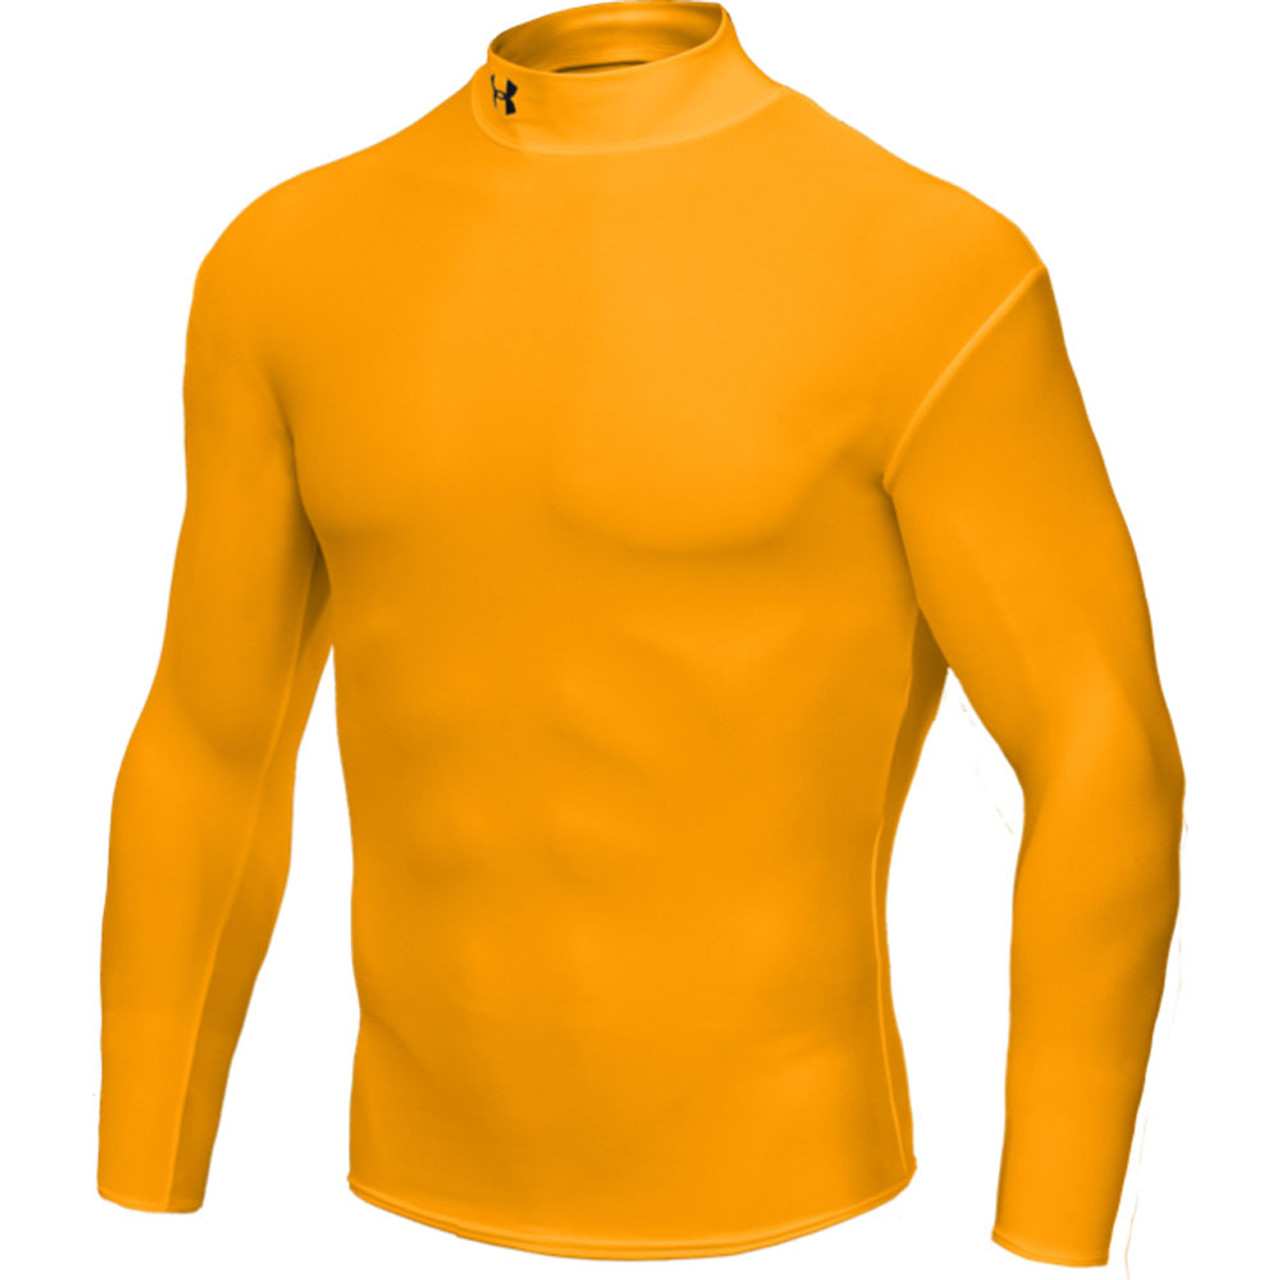 yellow under armour long sleeve shirt